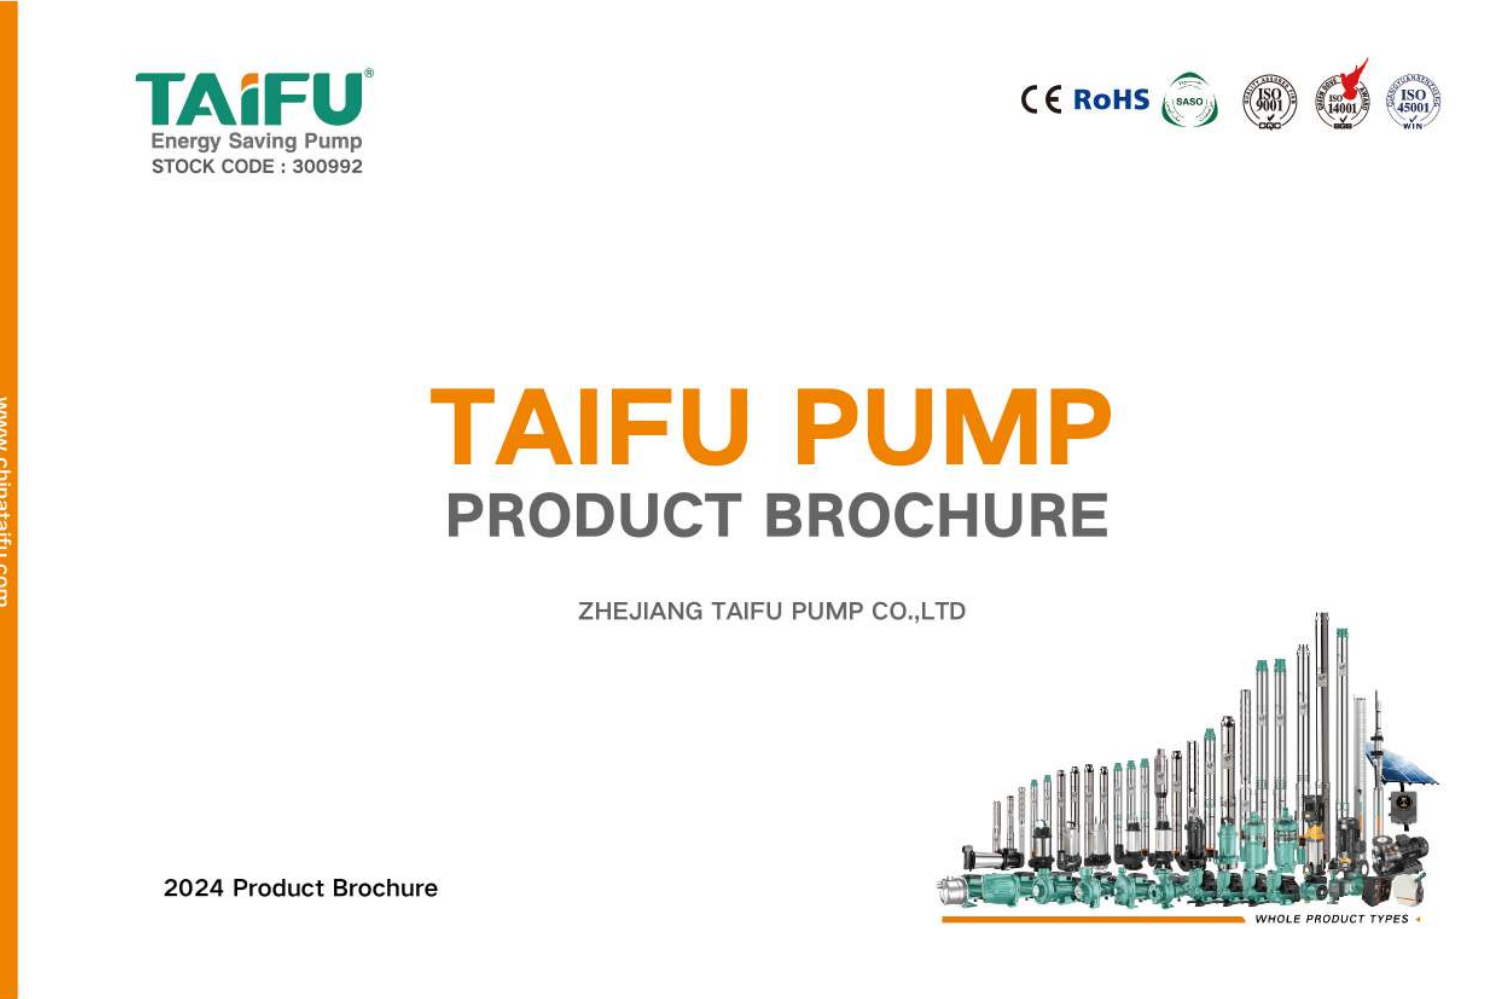 TAIFU PUMP PRODUCT BROCHURE